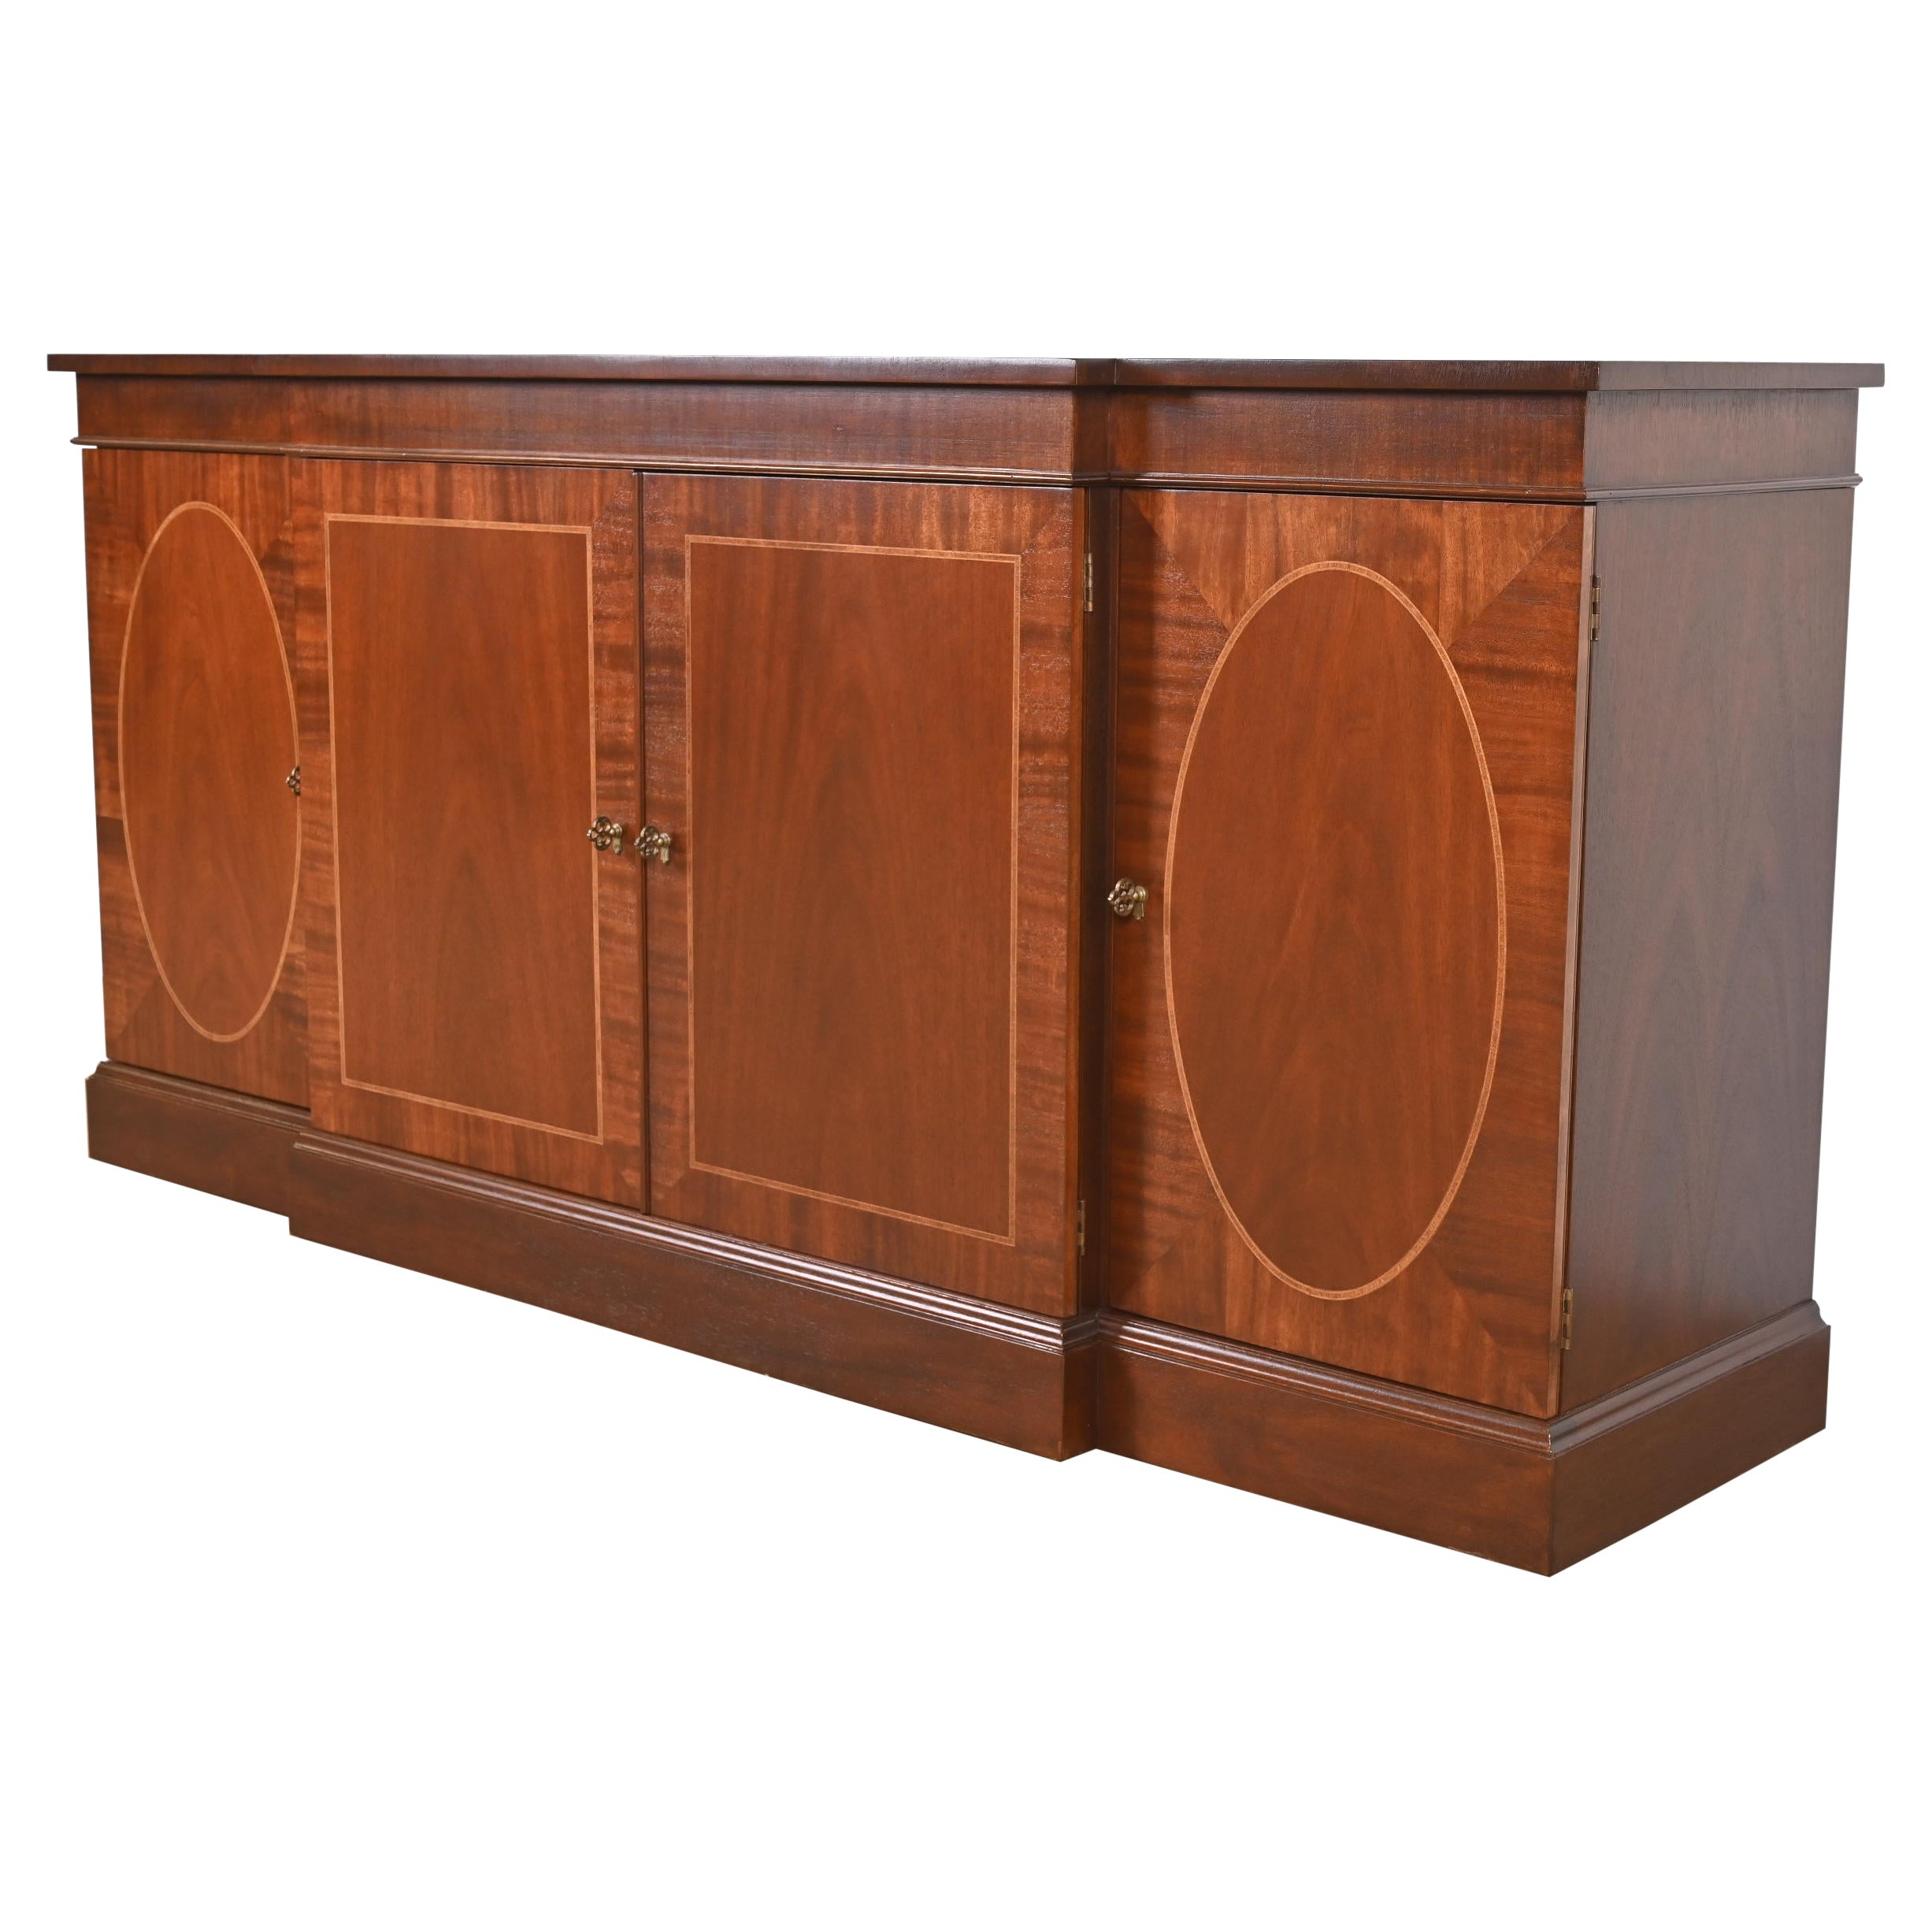 Baker Furniture Georgian Inlaid Mahogany Sideboard or Bar Cabinet, Refinished